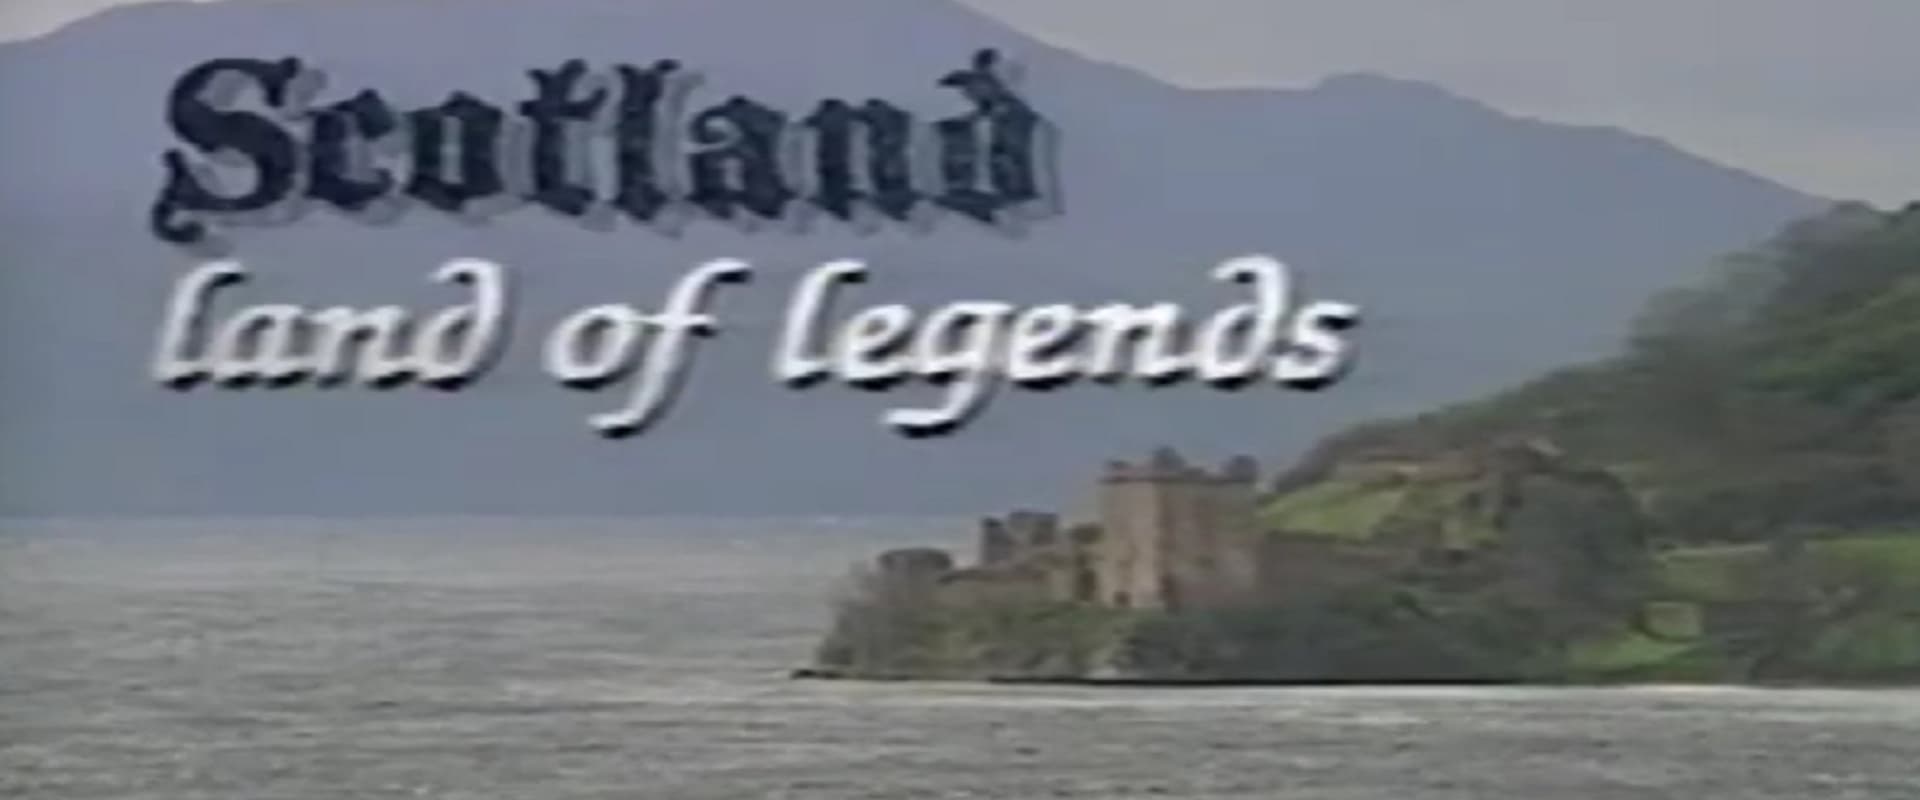 Video Visits: Scotland - Land of Legends